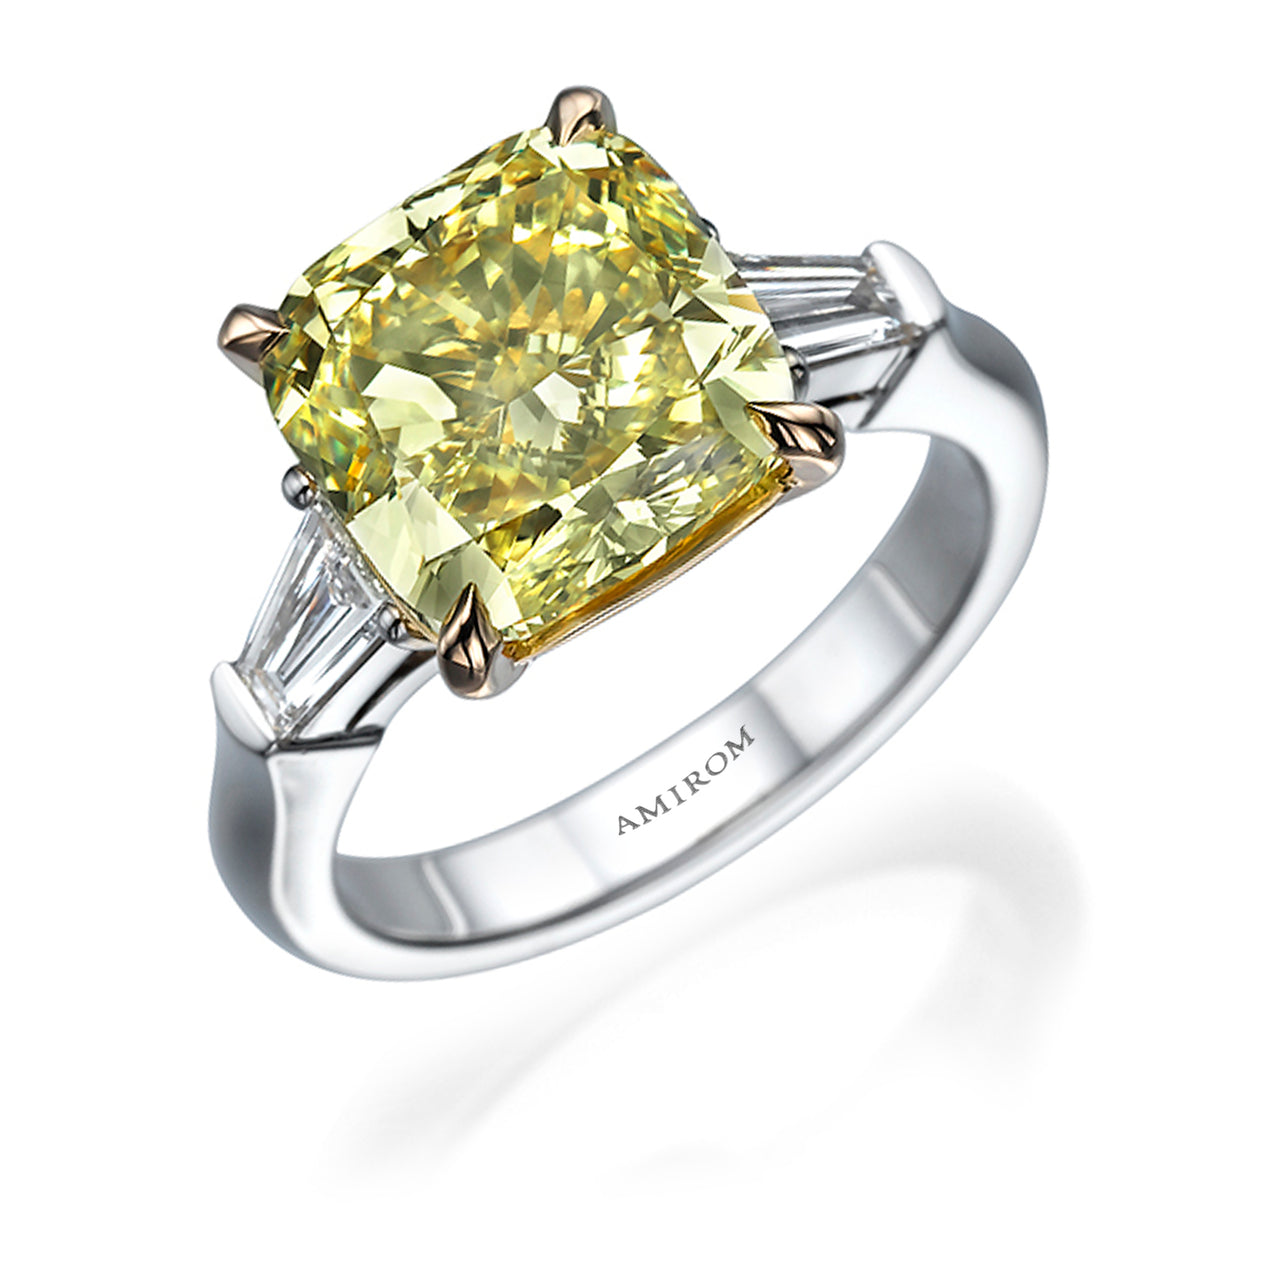 Fancy-Intense Yellow Diamond Ring